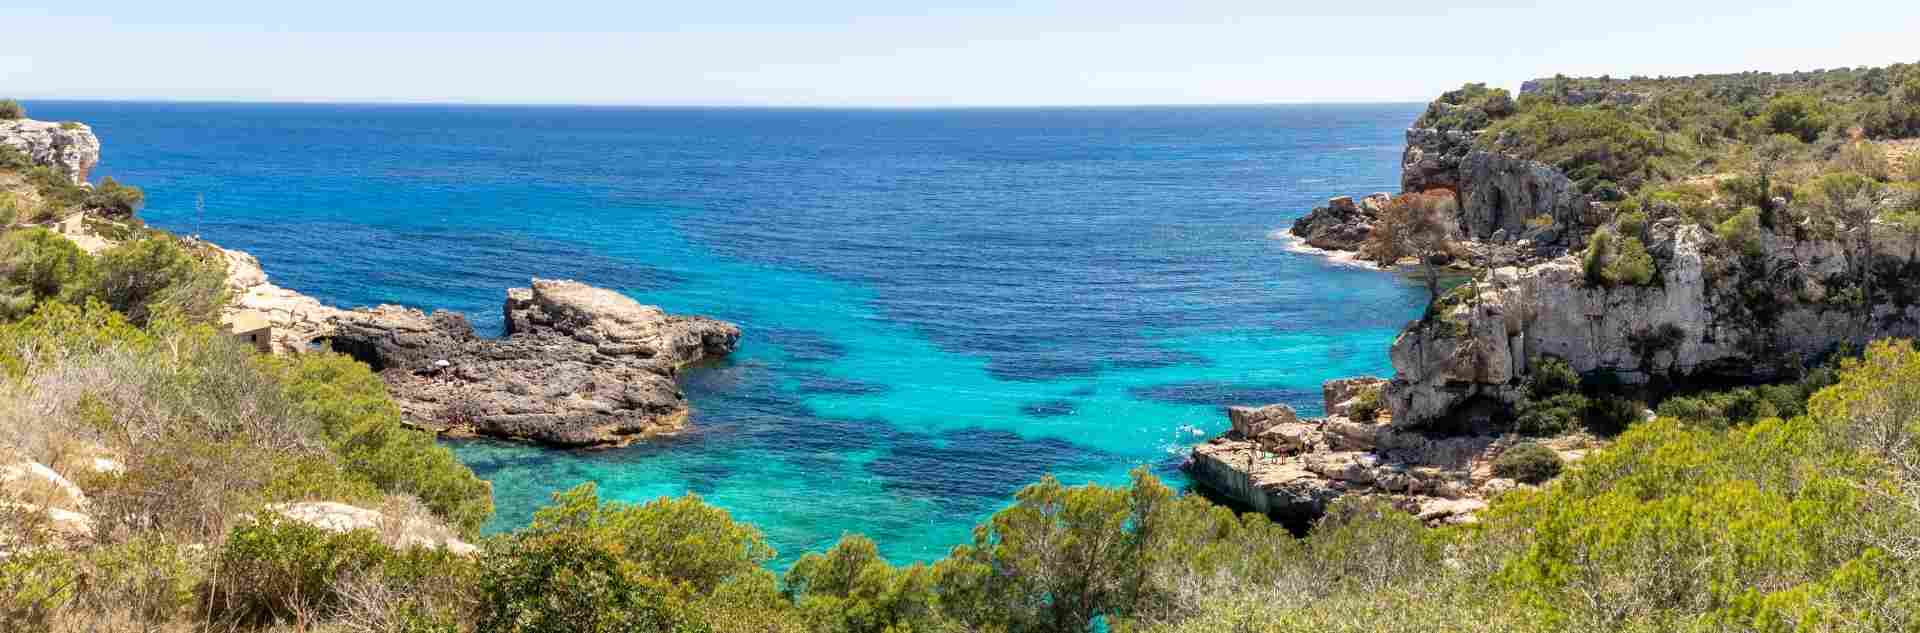 Urlaub Mallorca - Bucht Mallorca